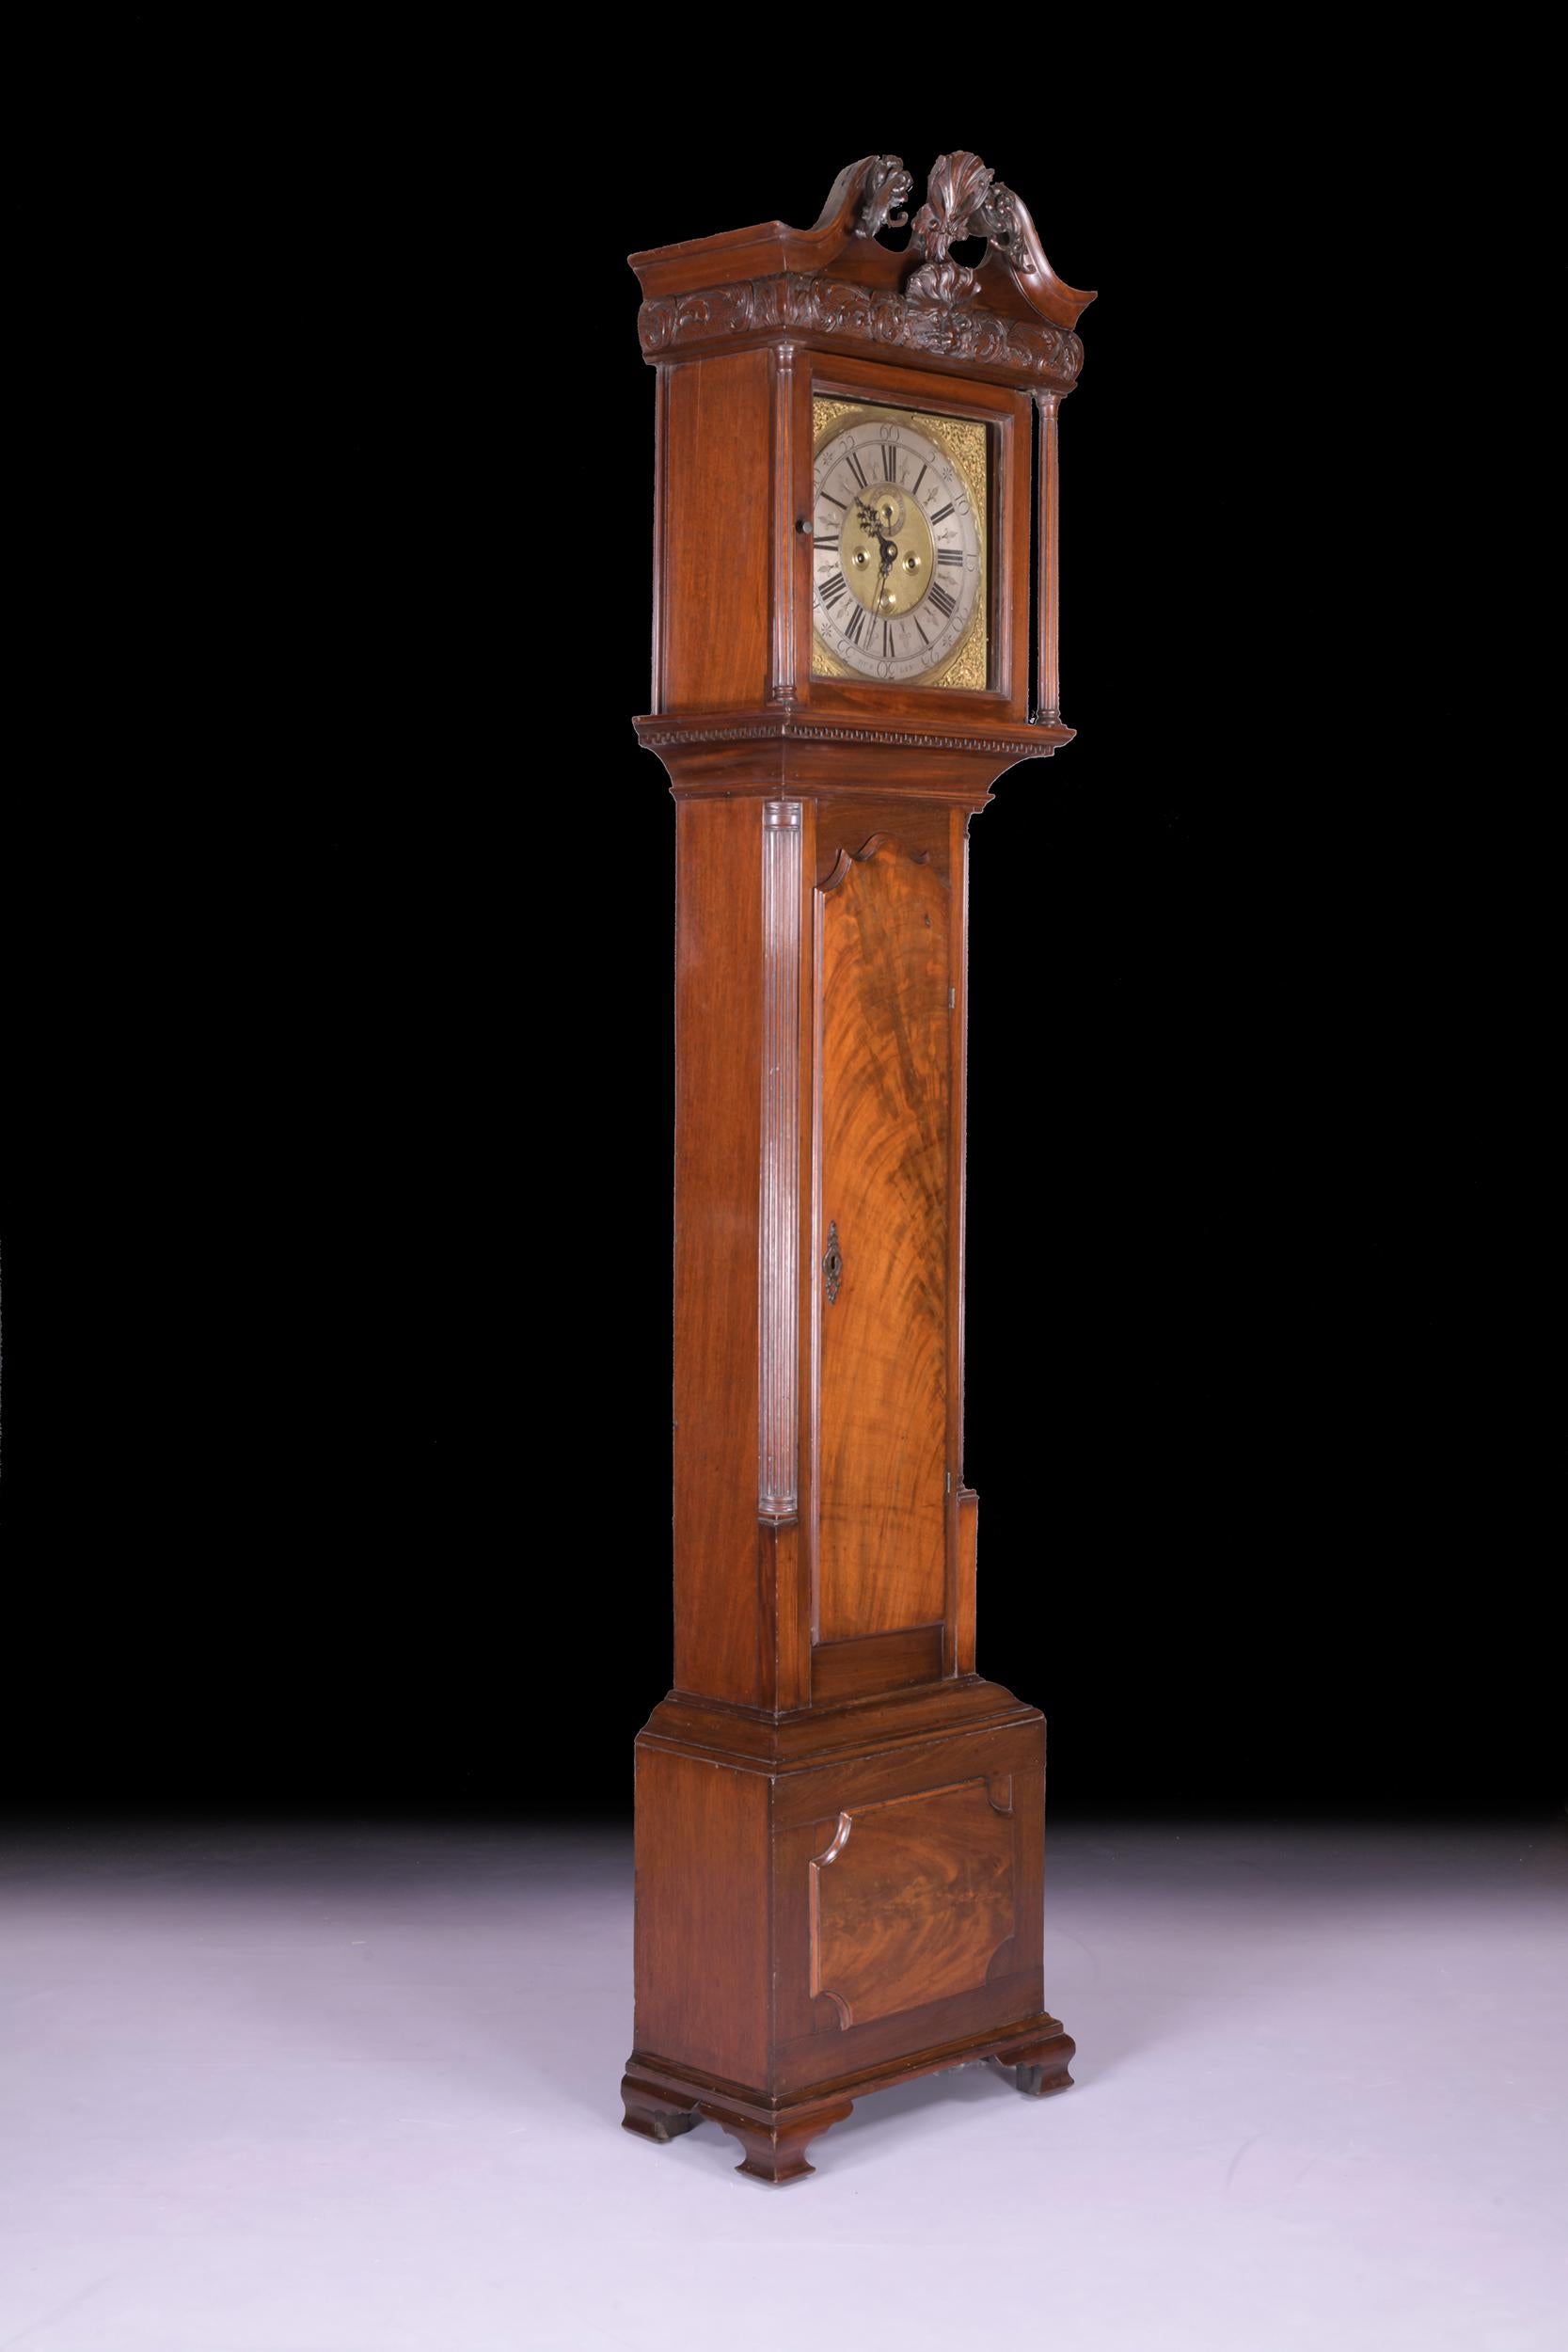 Georgian 18th Century Irish Longcase Clock by Thomas Sanderson of Dublin Ireland